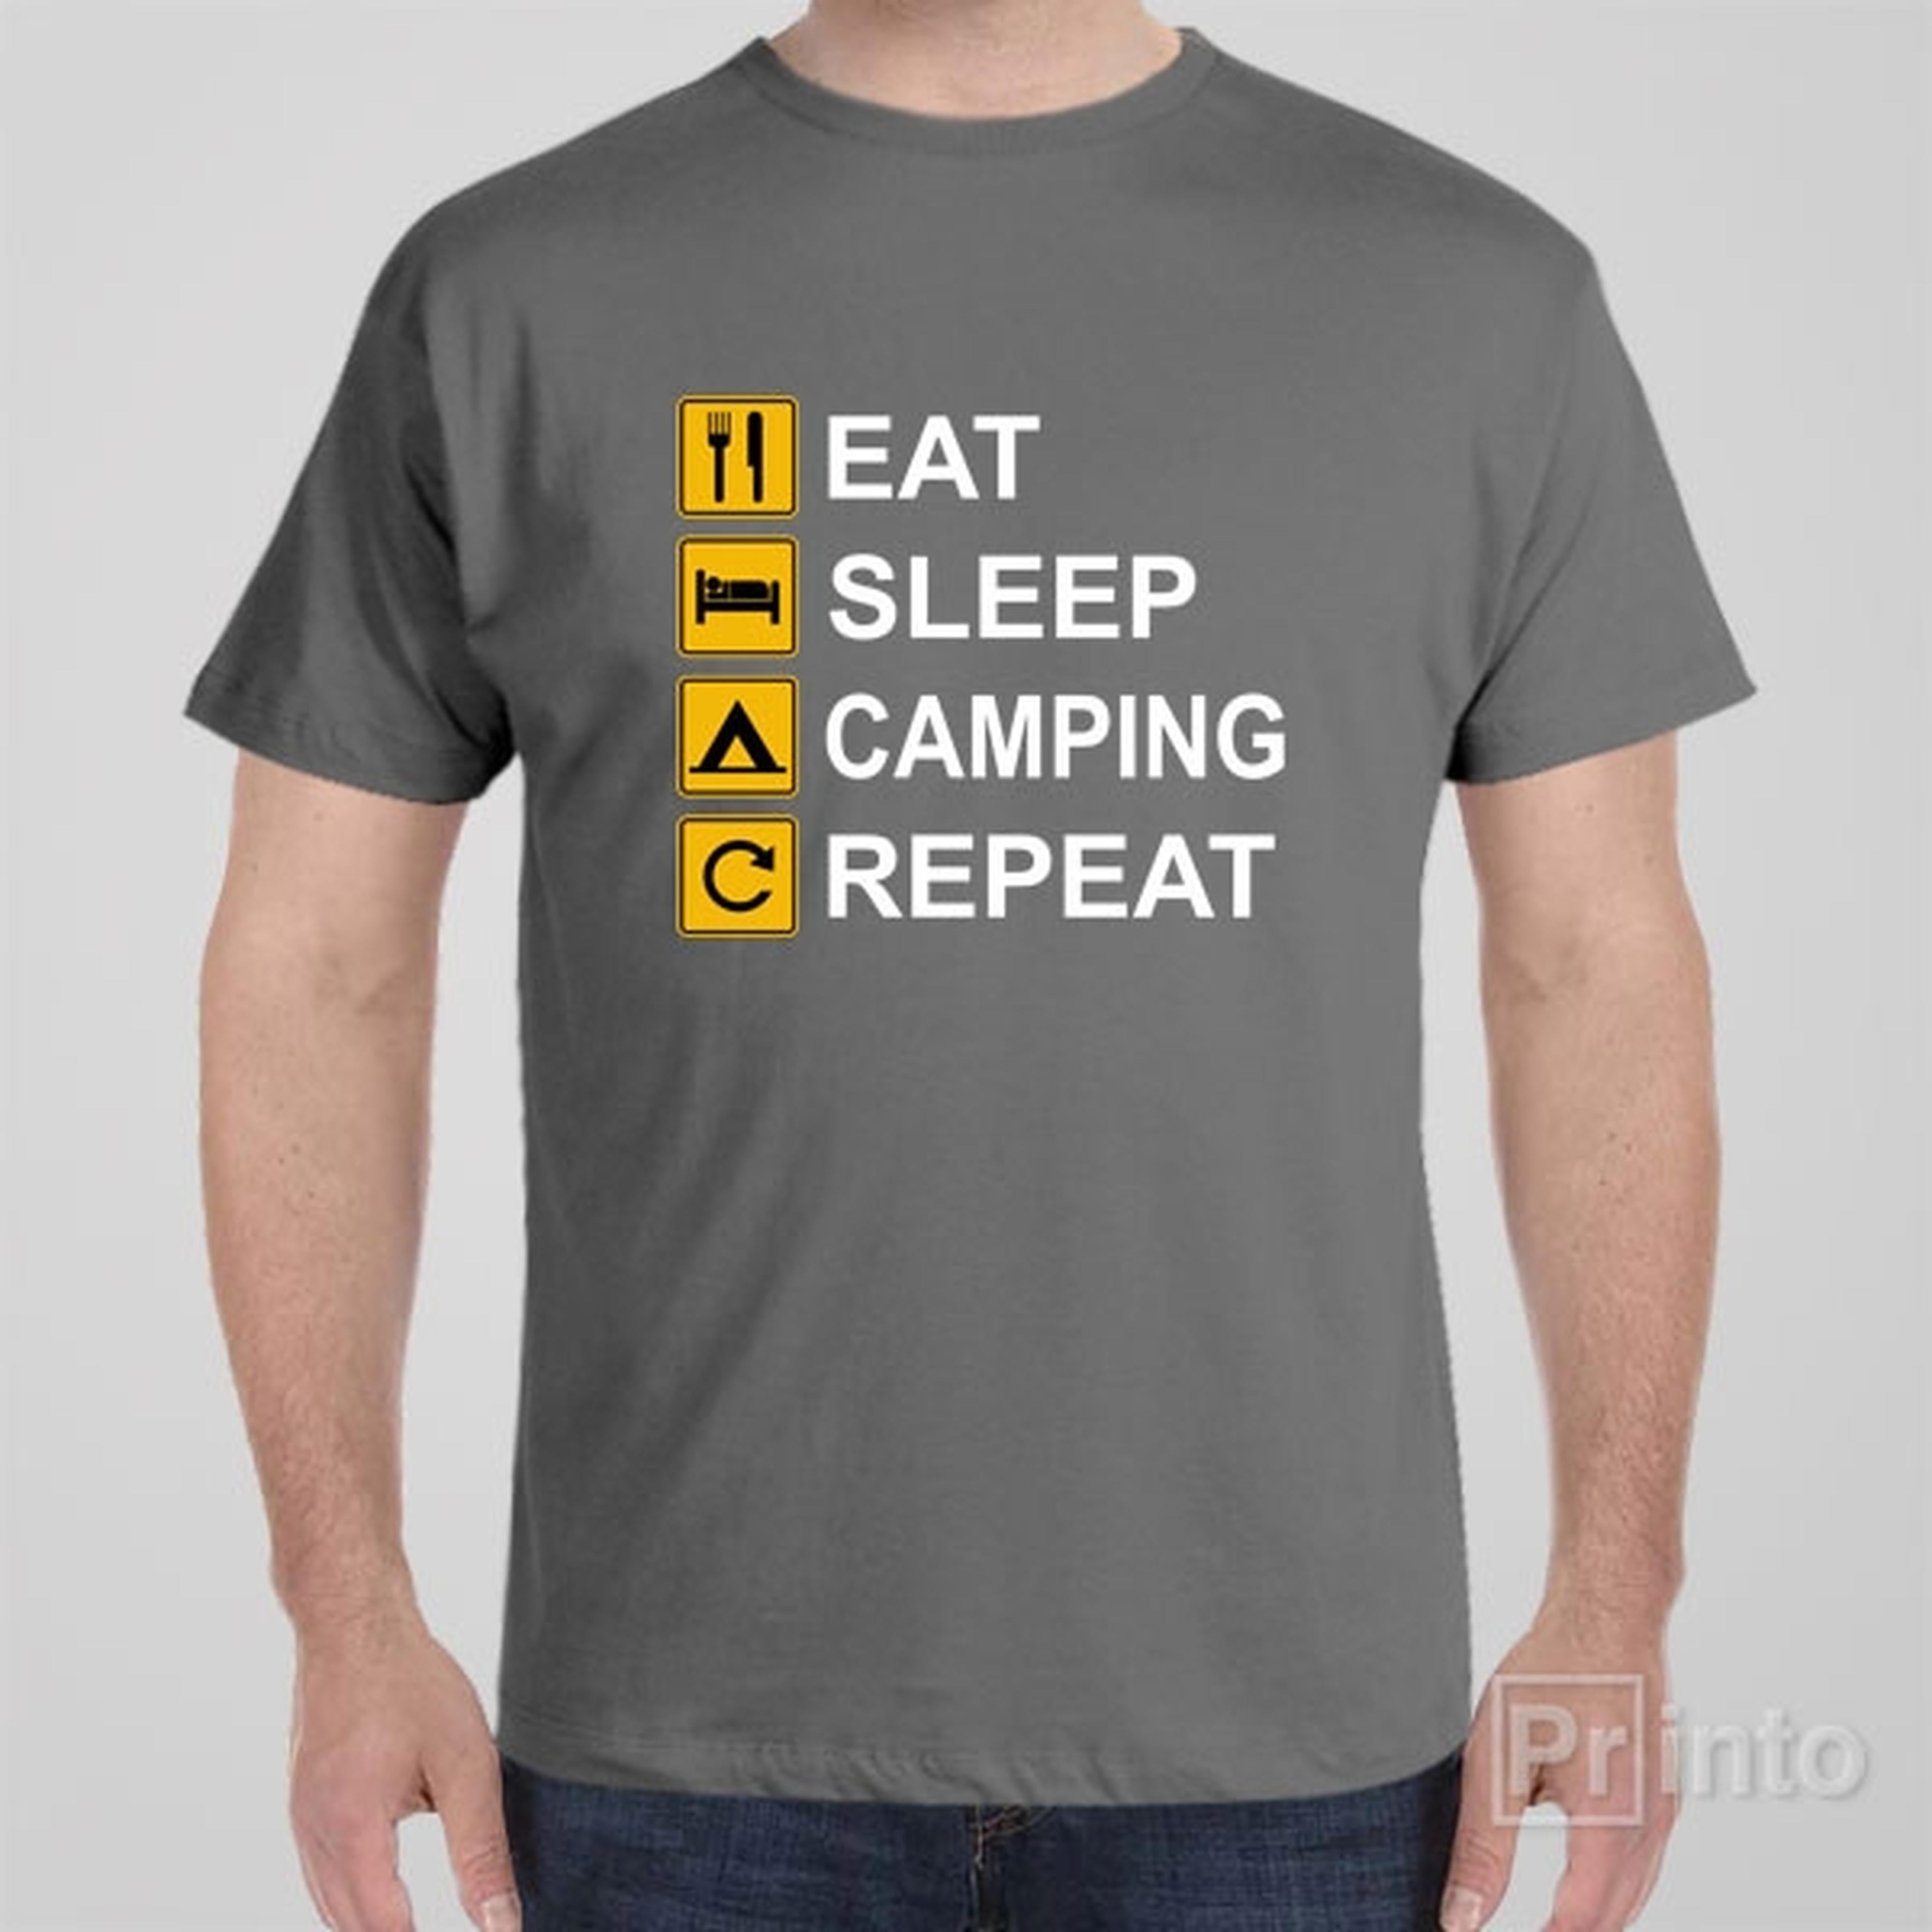 eat-sleep-camping-repeat-t-shirt